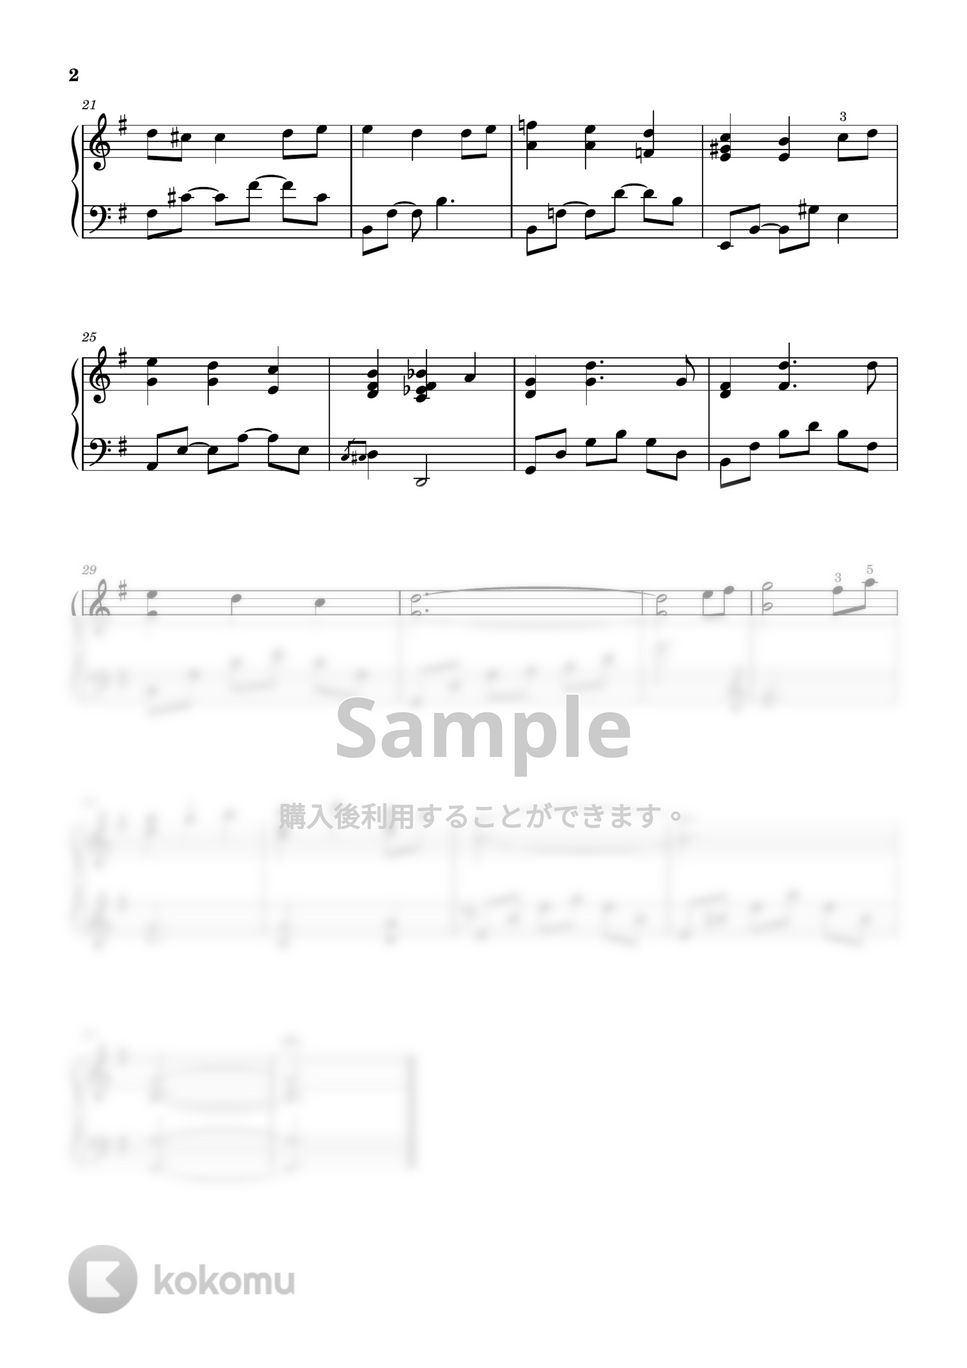 Hisaishi Joe - ふたたび (千と千尋の神隱し OST) by Hellopiano